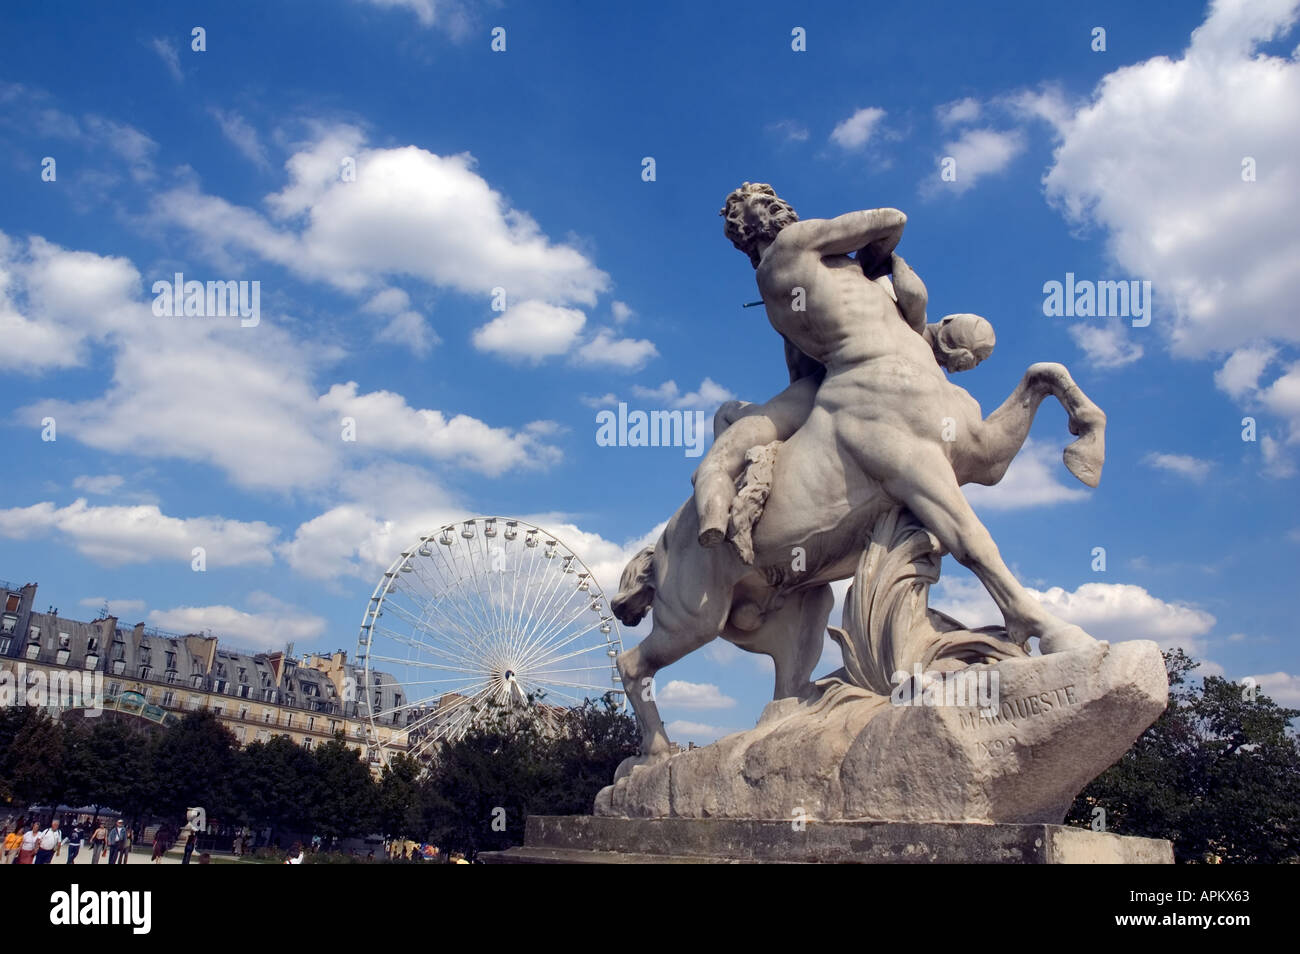 A centaur sculpture in the Jardin des Tuileries in Paris, France. Stock Photo